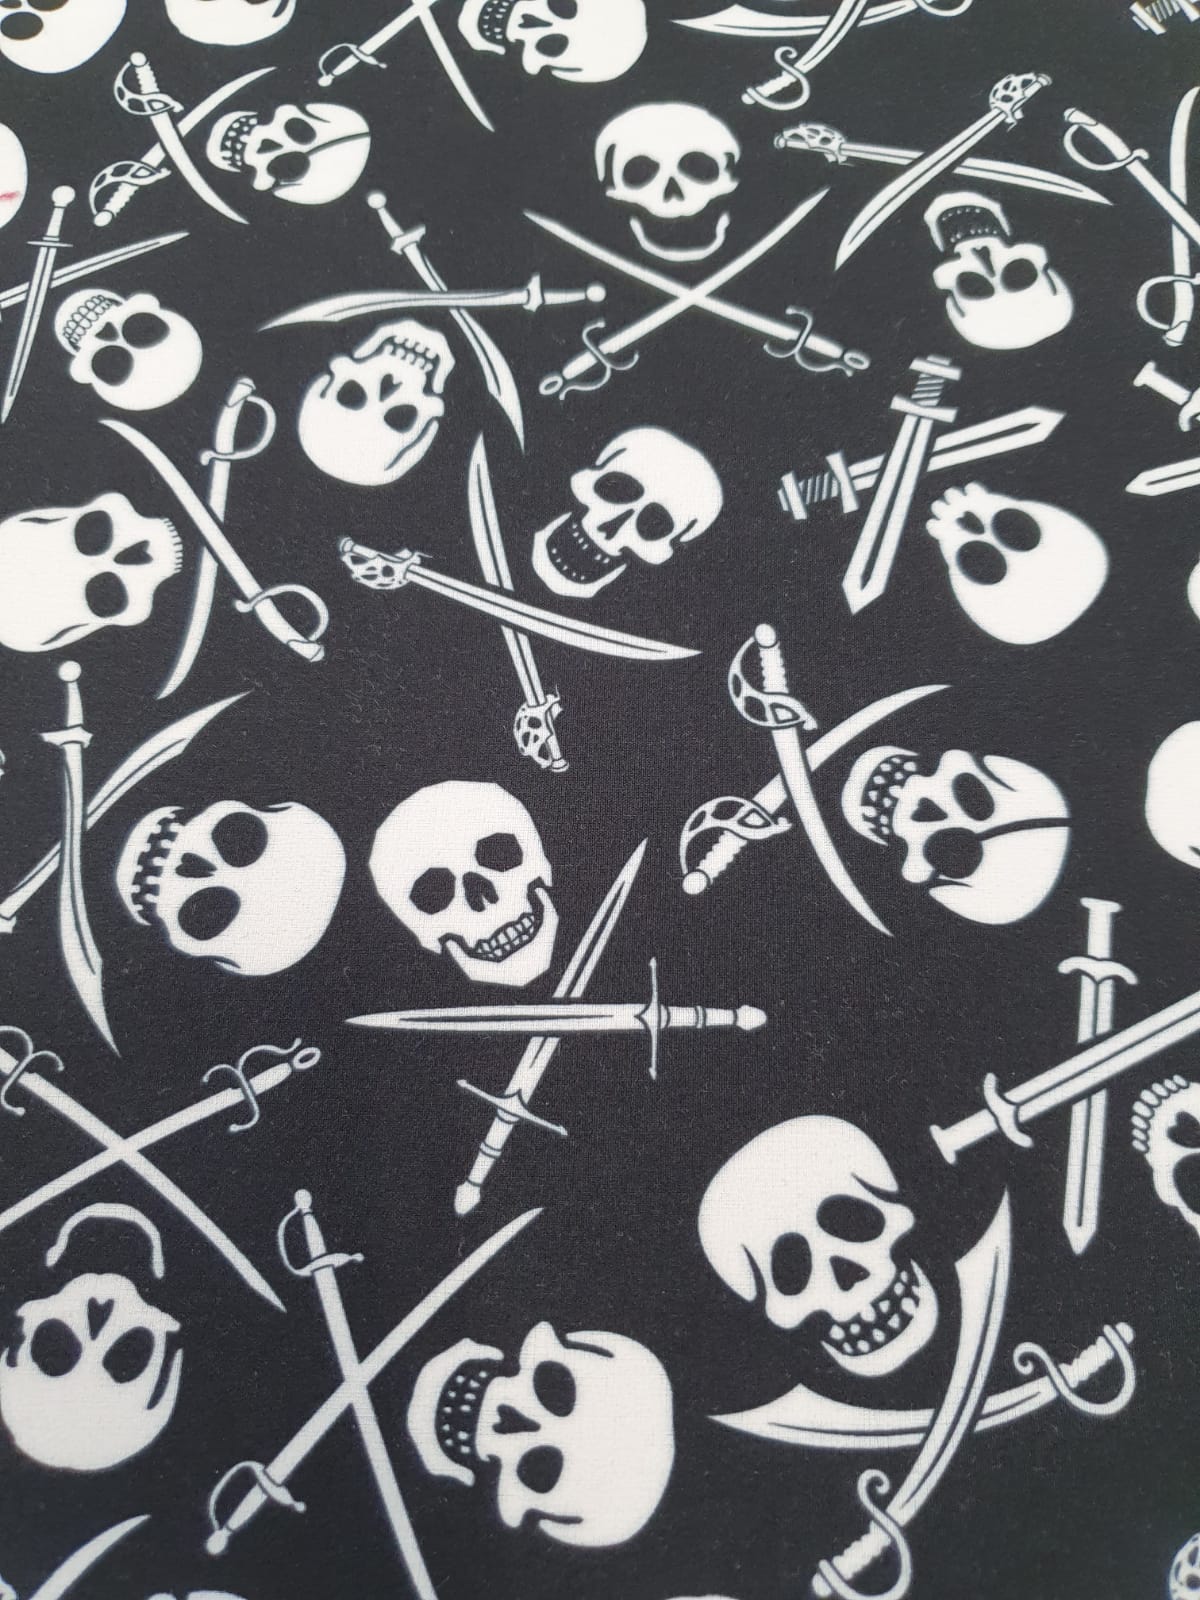 Winter softshell with fleece, 1 meter, printed pirate skulls